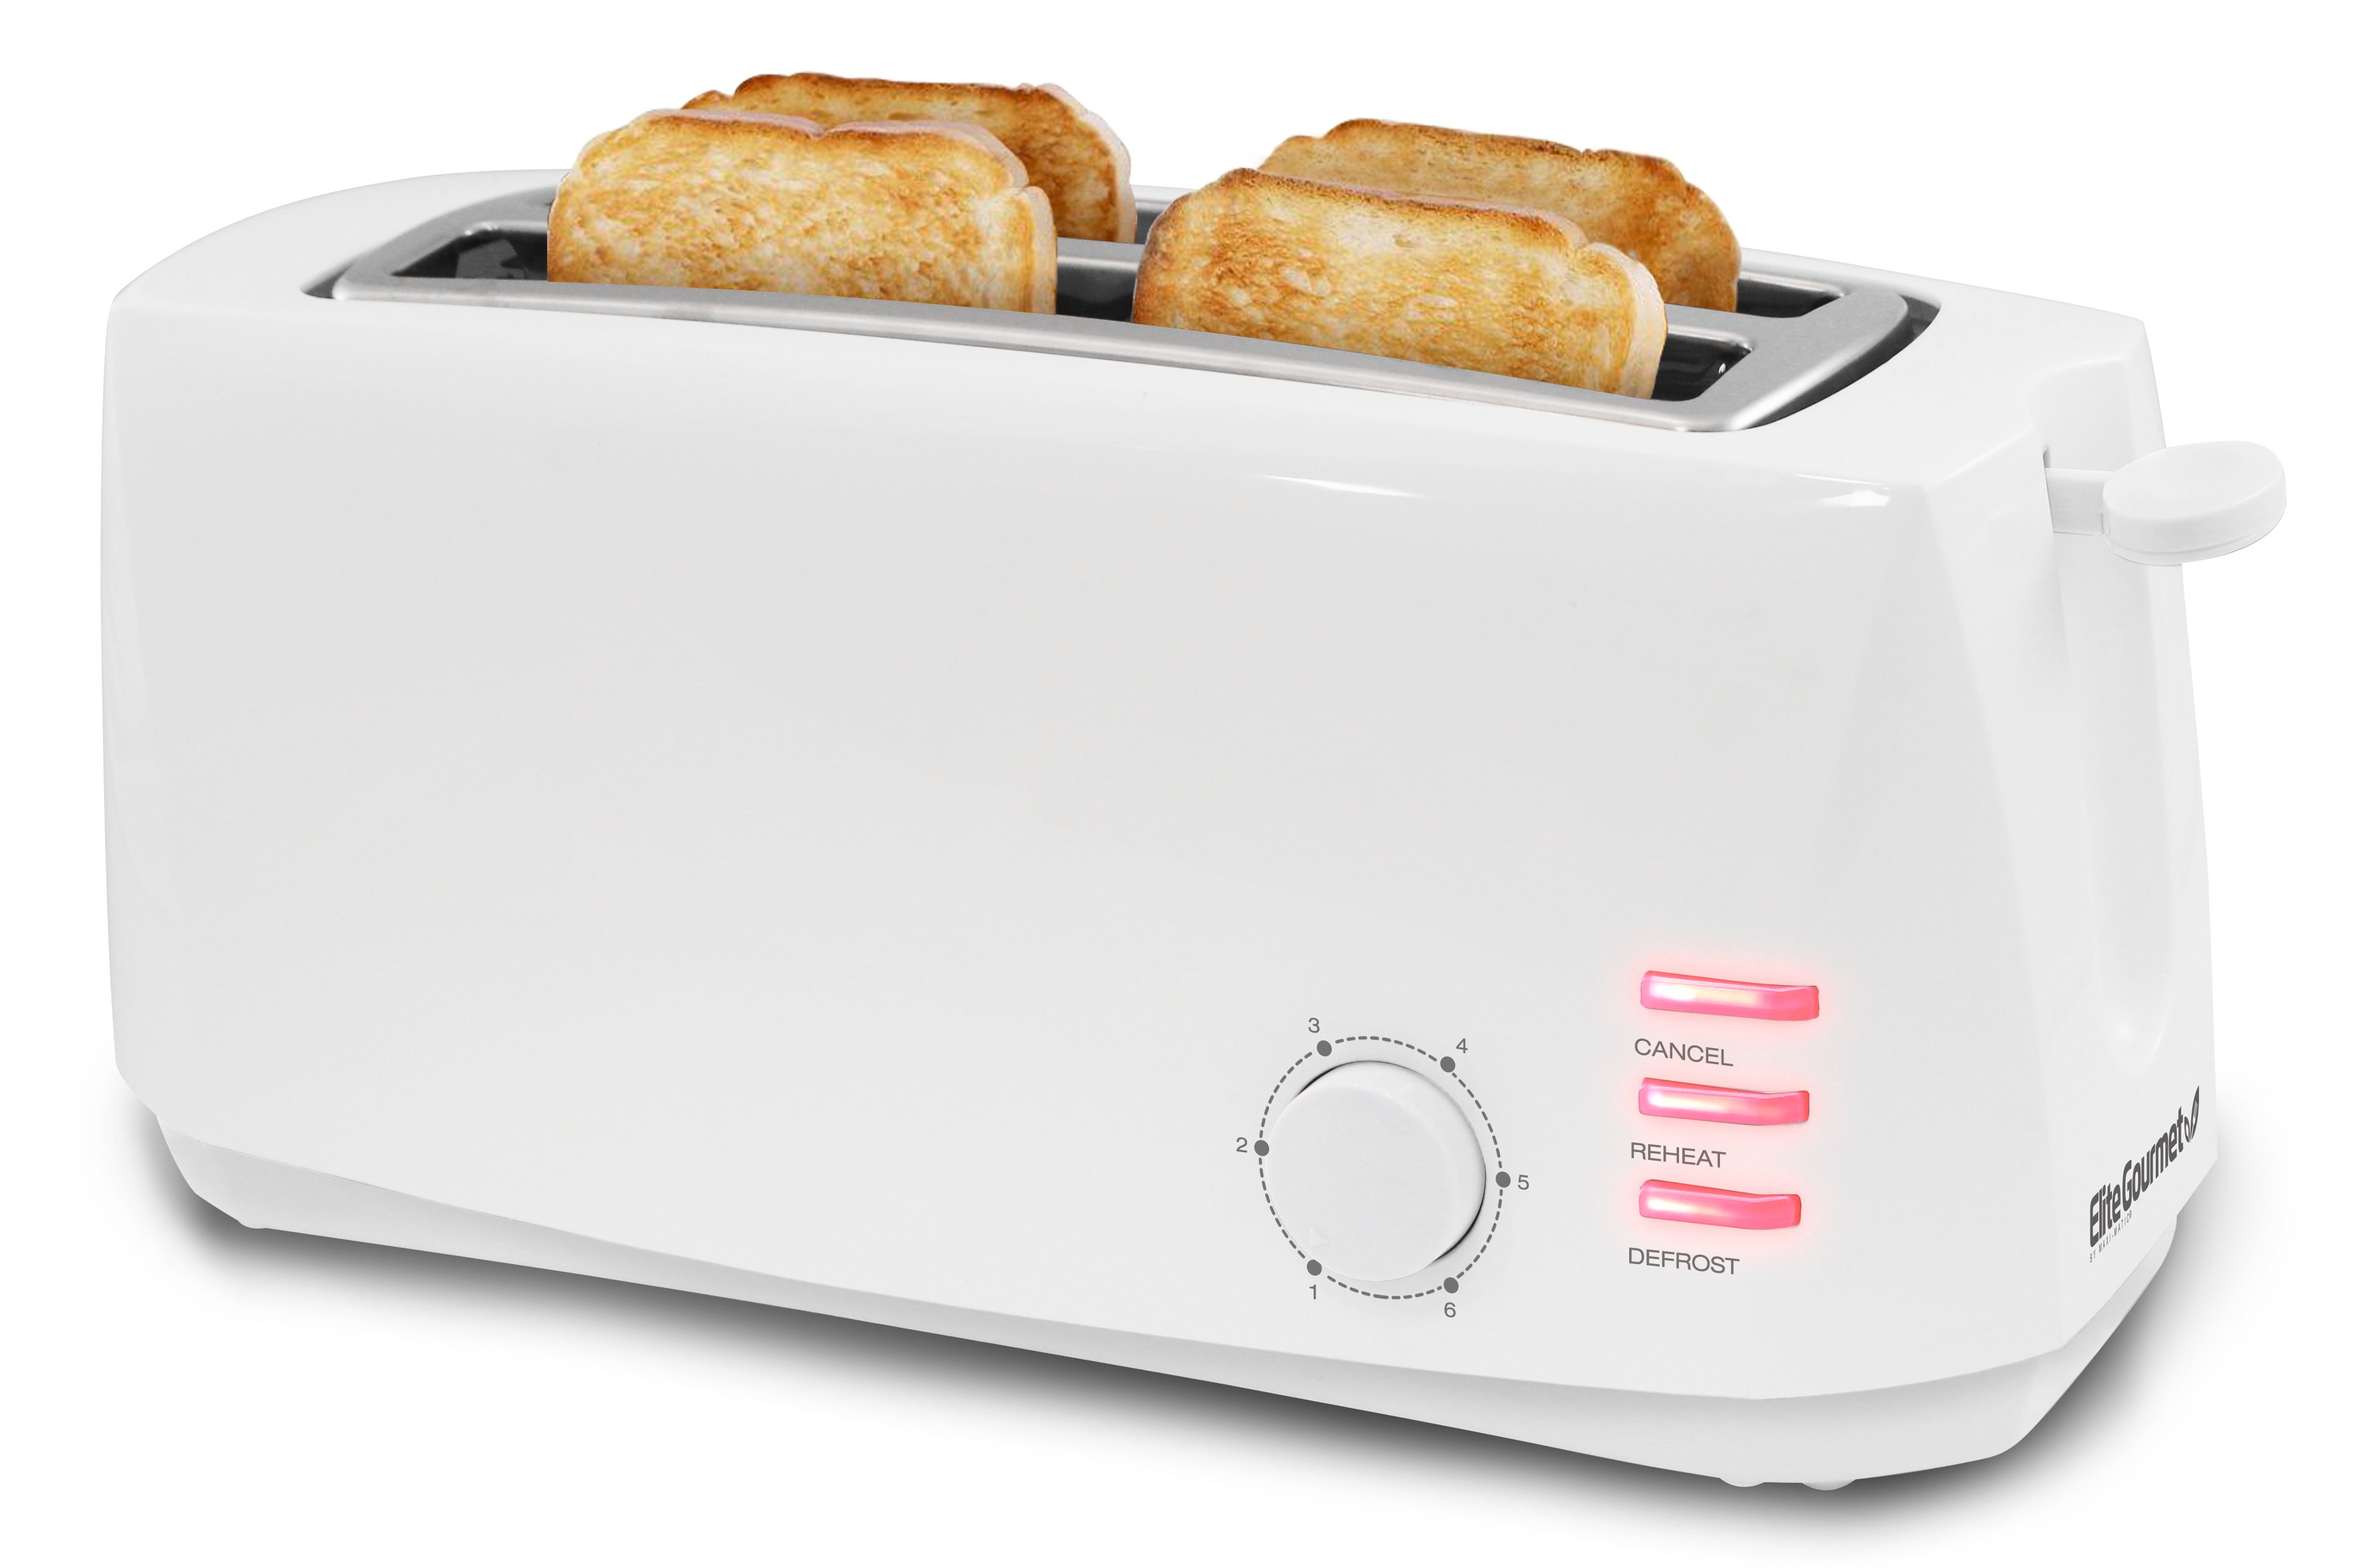 Extra-Wide Slot 4-Slice Toaster